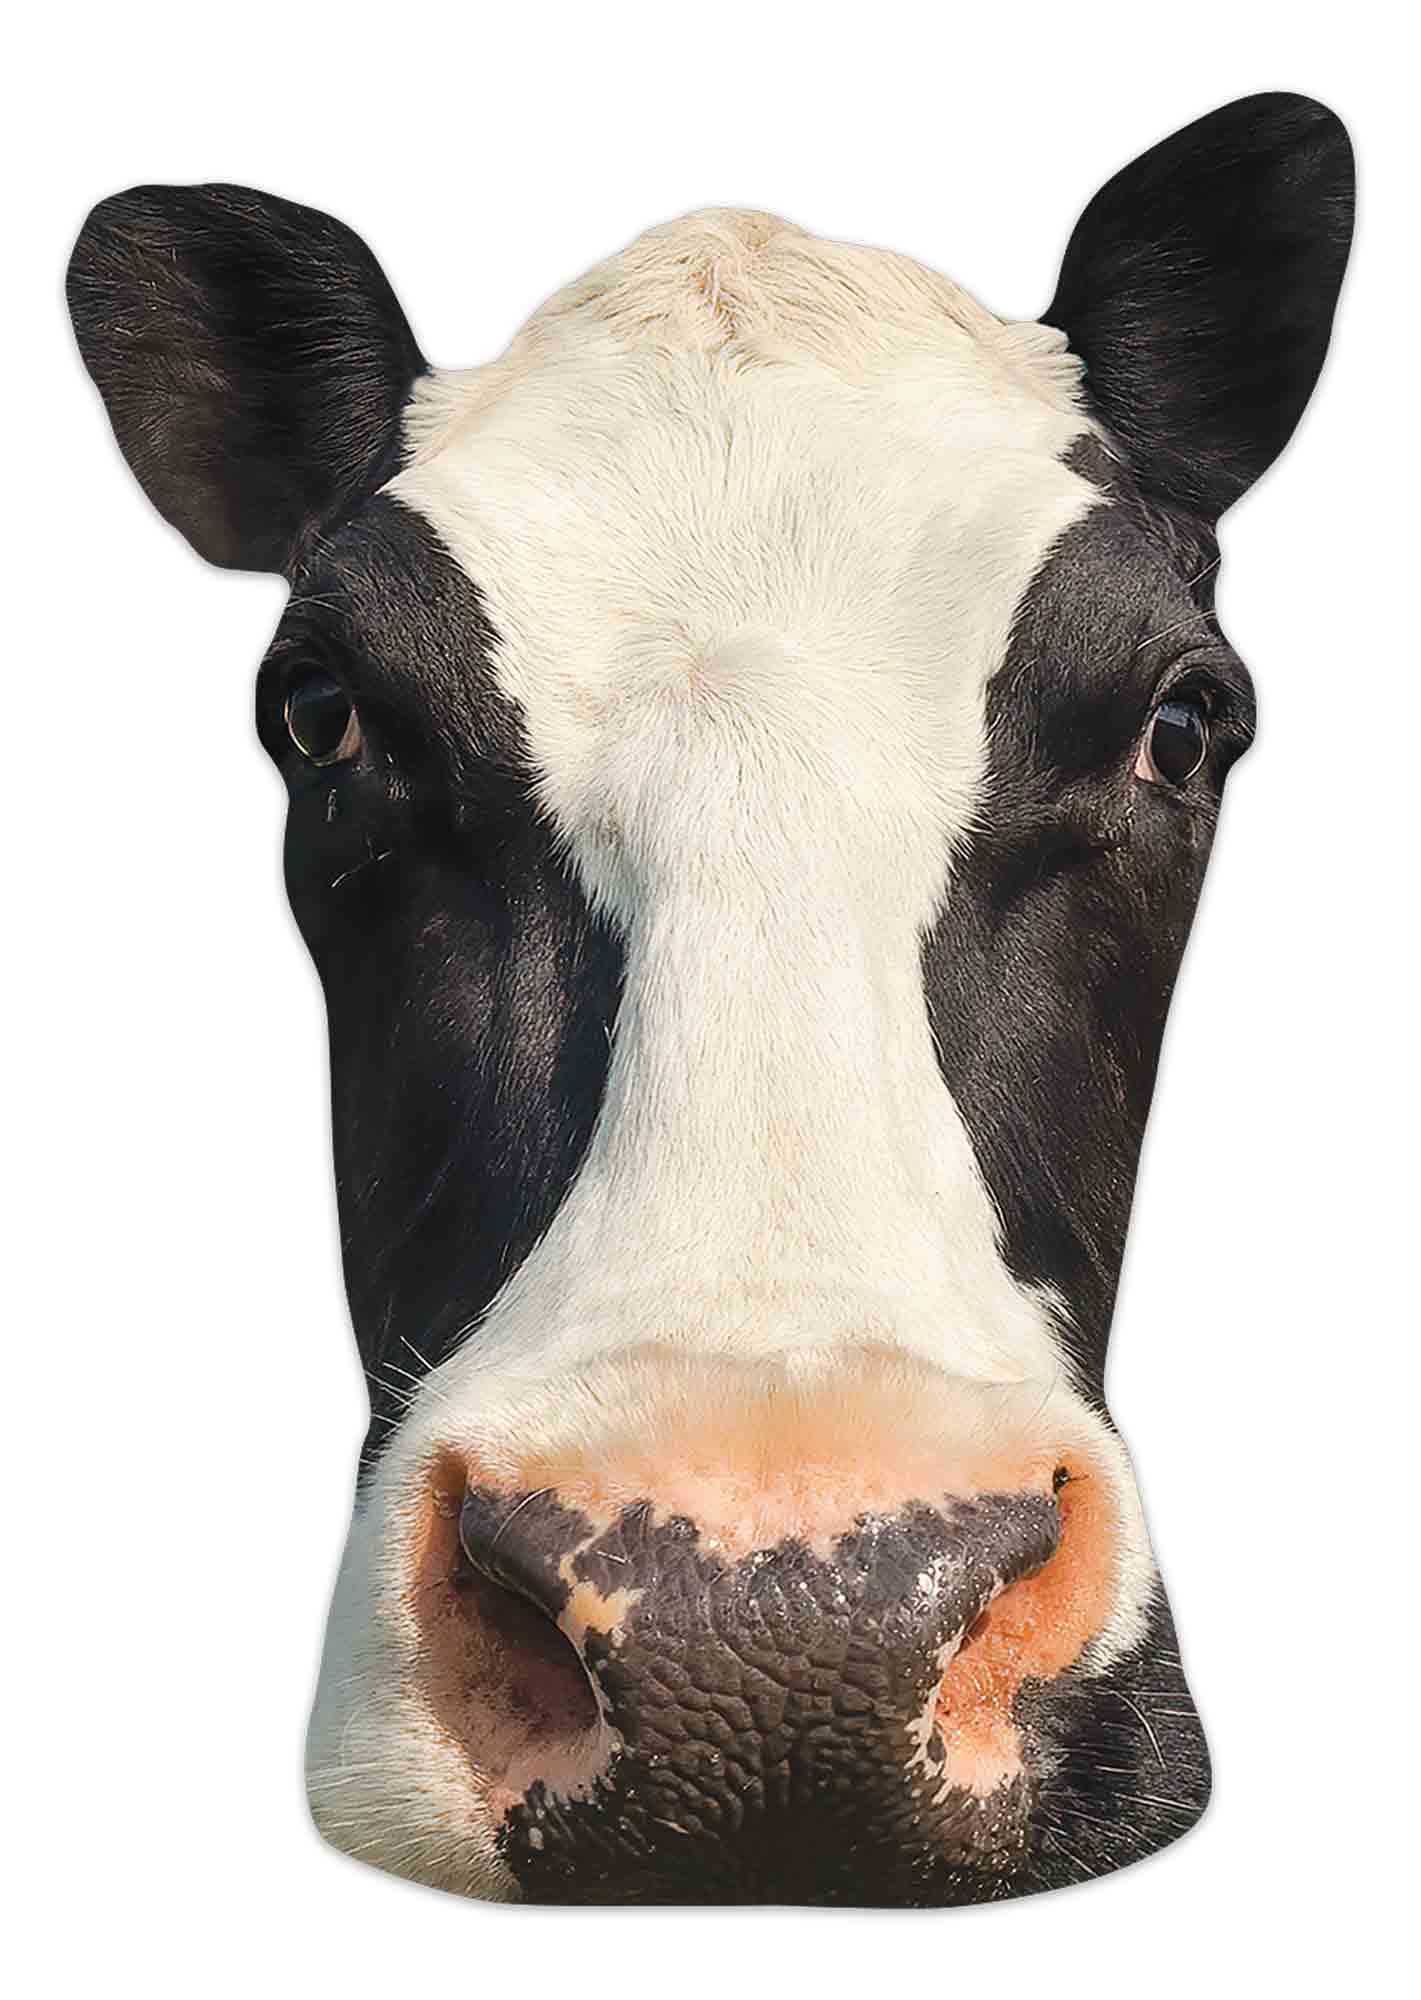 SM394 Cow Animal Single Face Mask